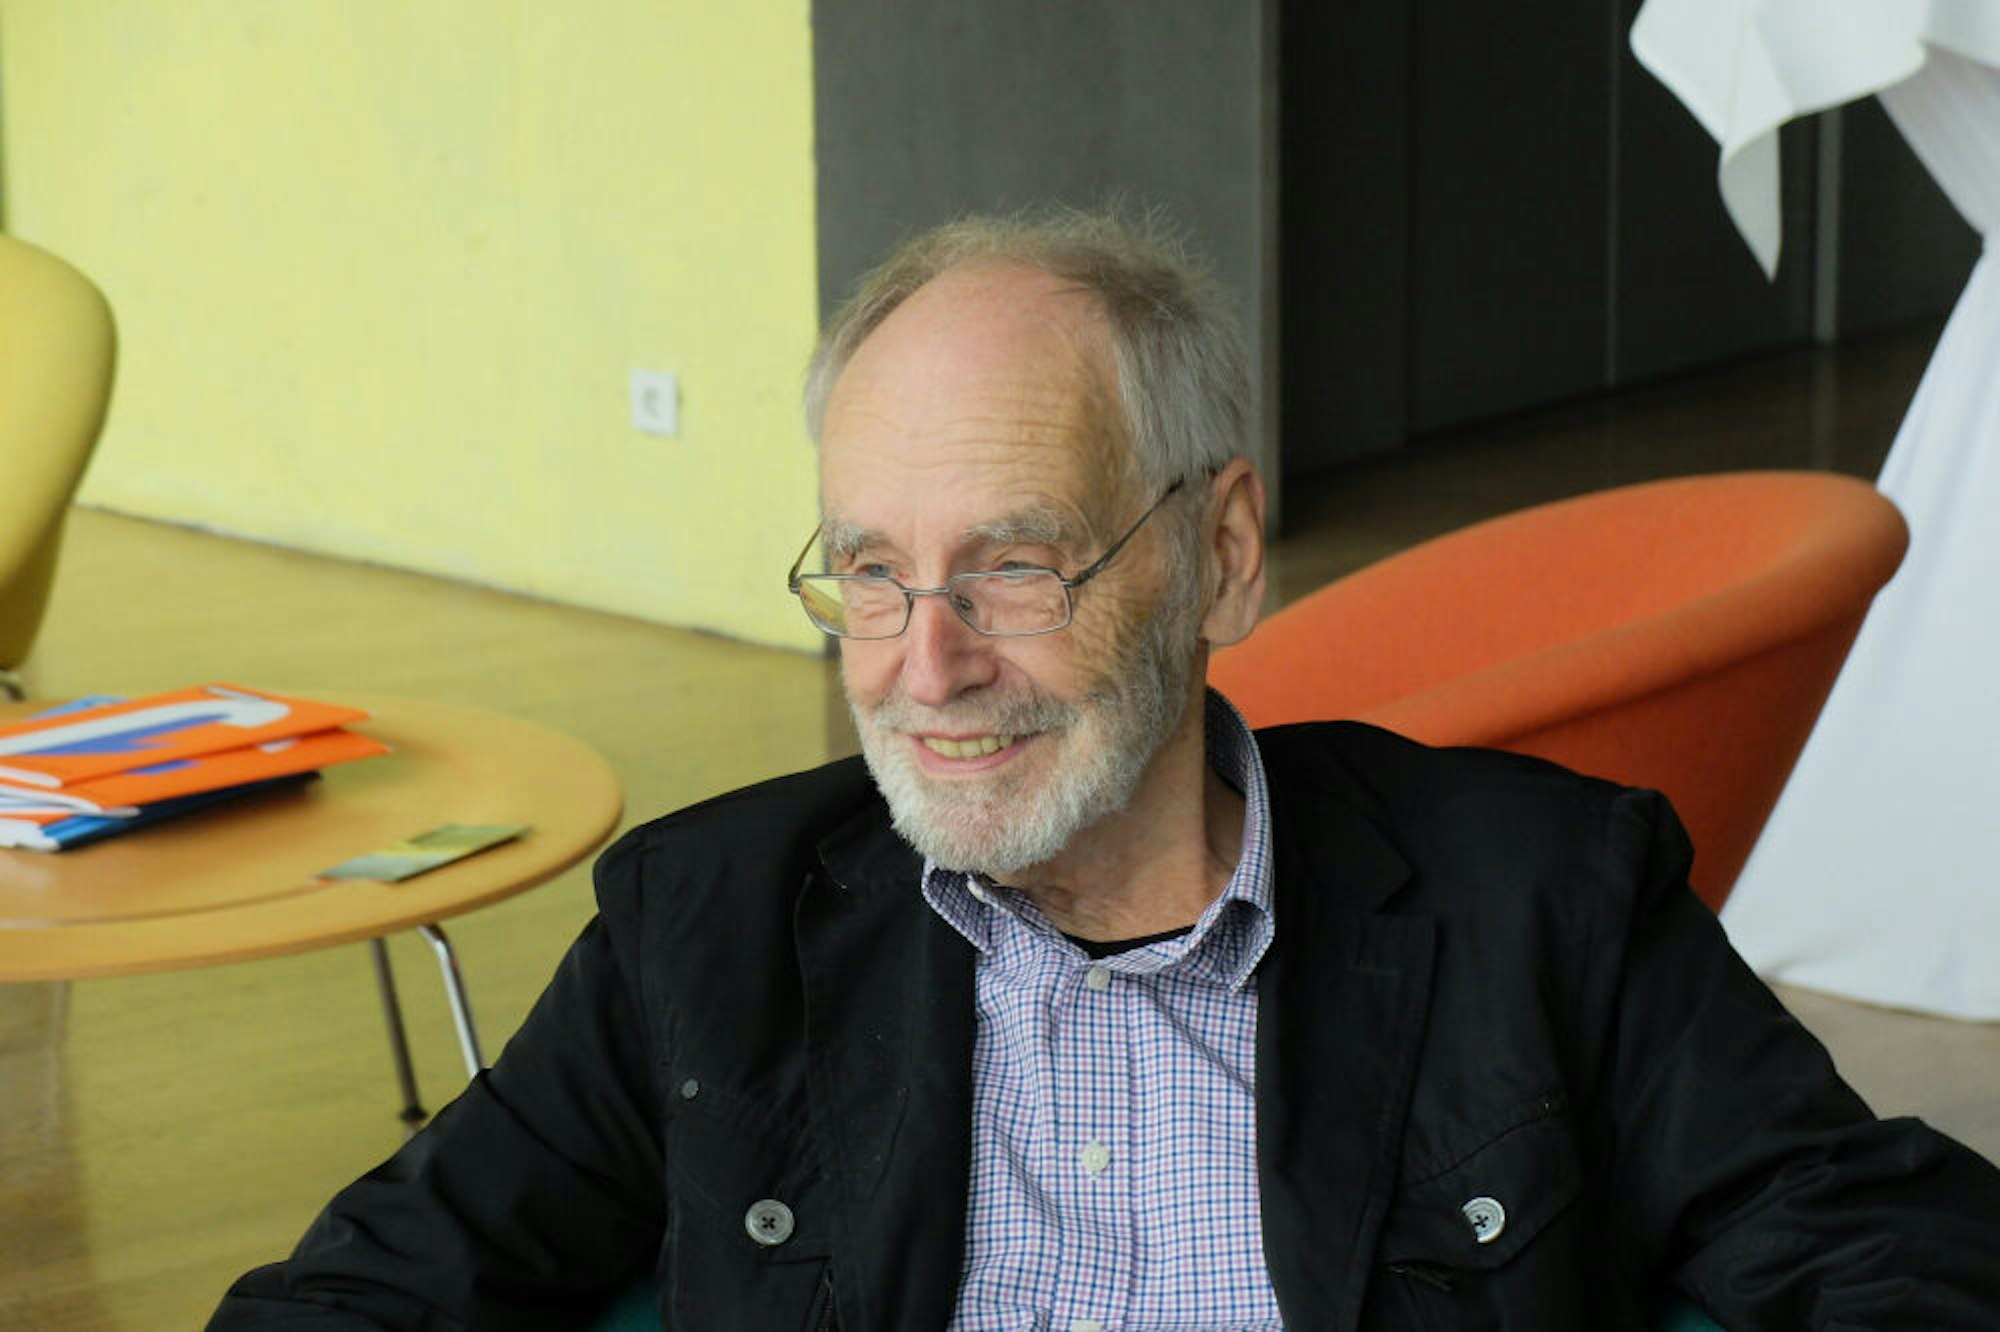 Der Kölner Architekturhistoriker Wolfgang Pehnt